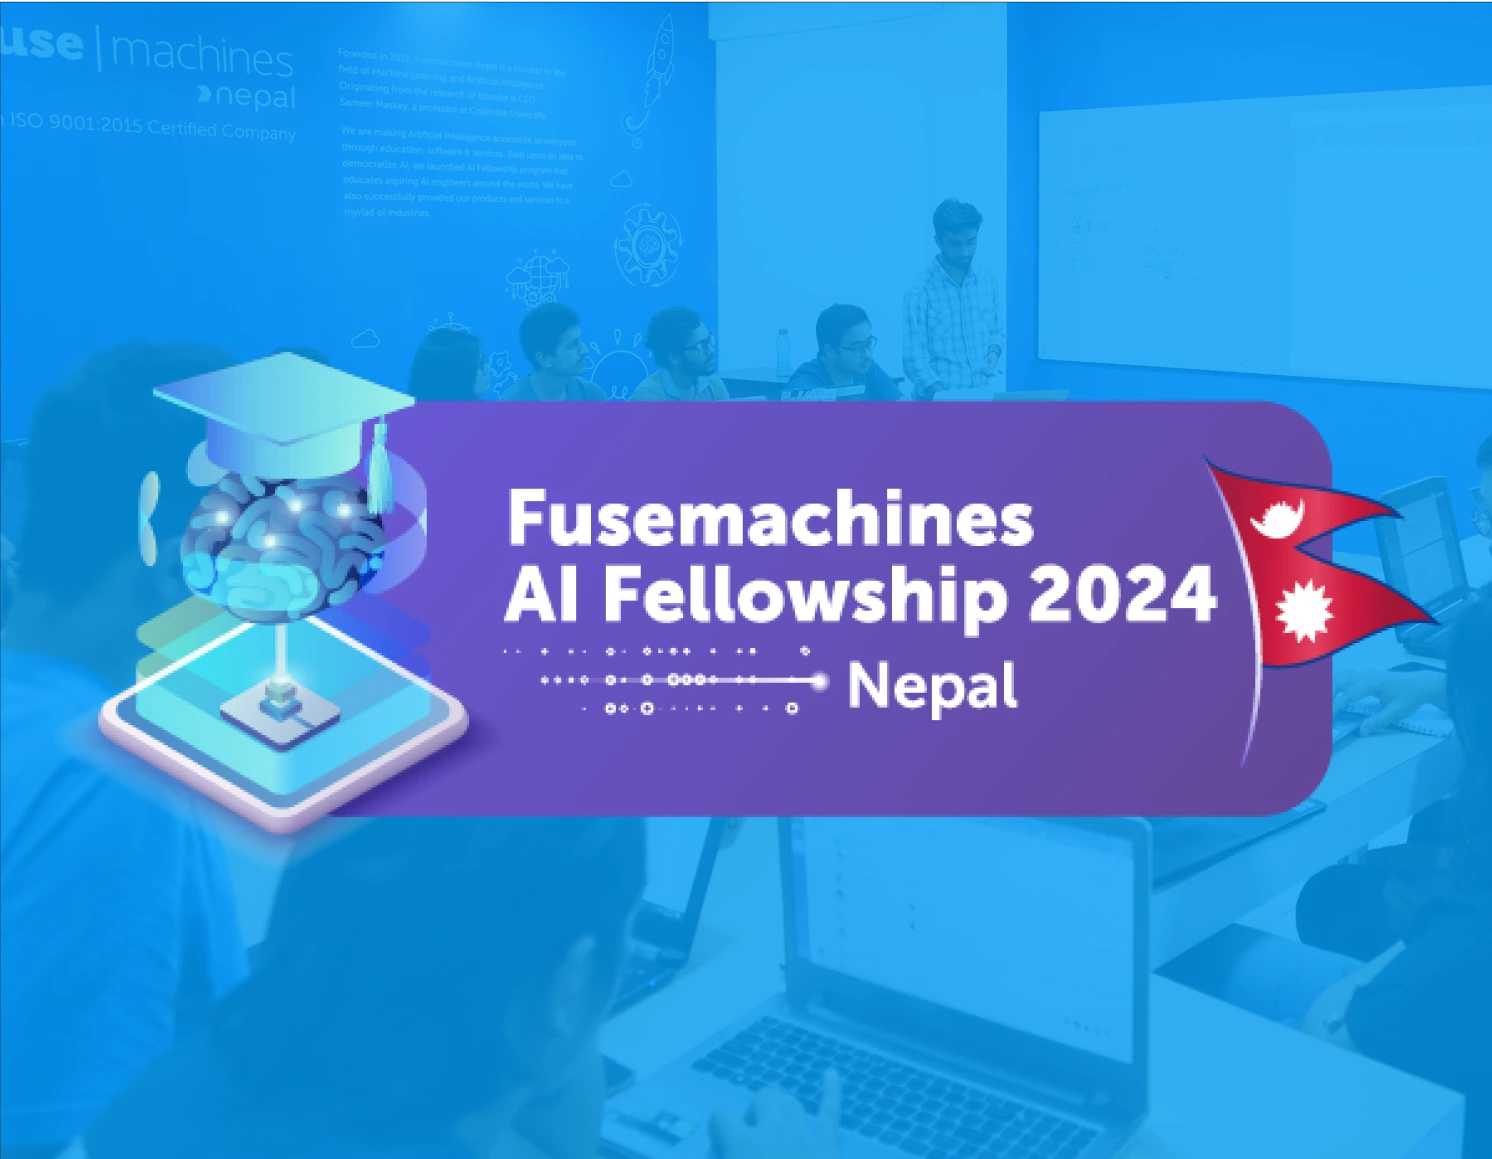 Fusemachines Announces AI Fellowship 2024 in Nepal